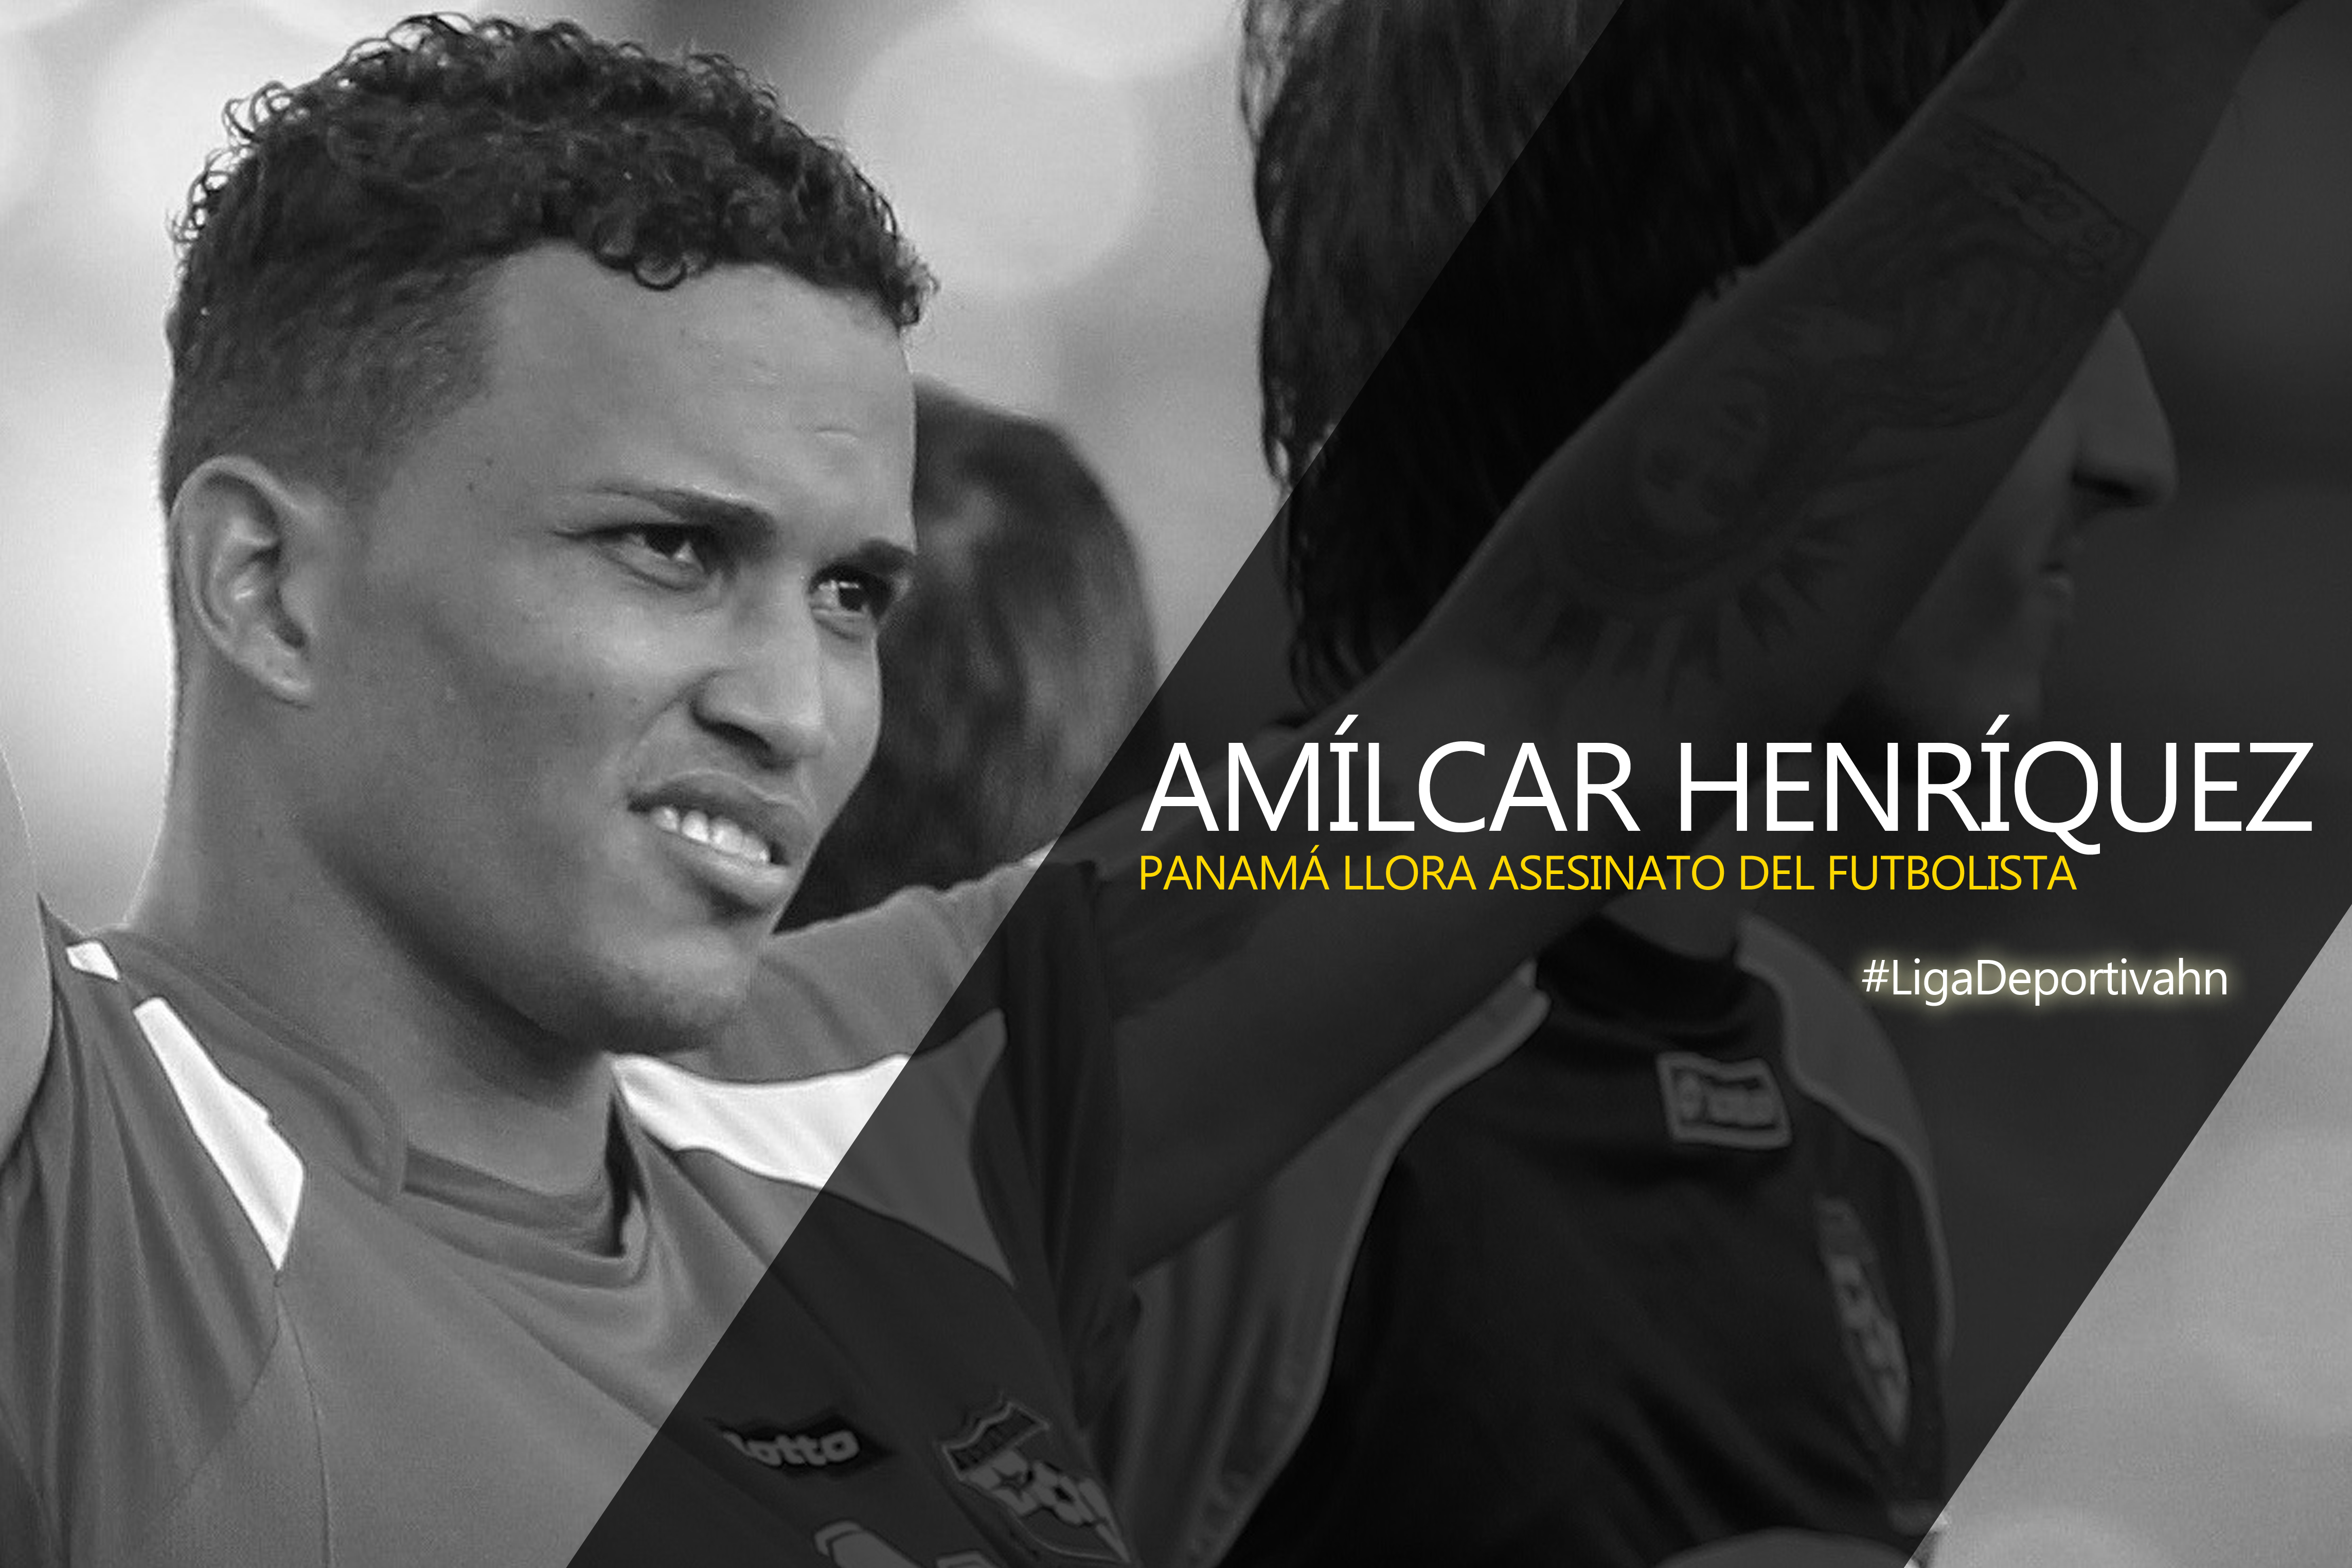 Panamá llora el asesinato del futbolista Amílcar Henríquez